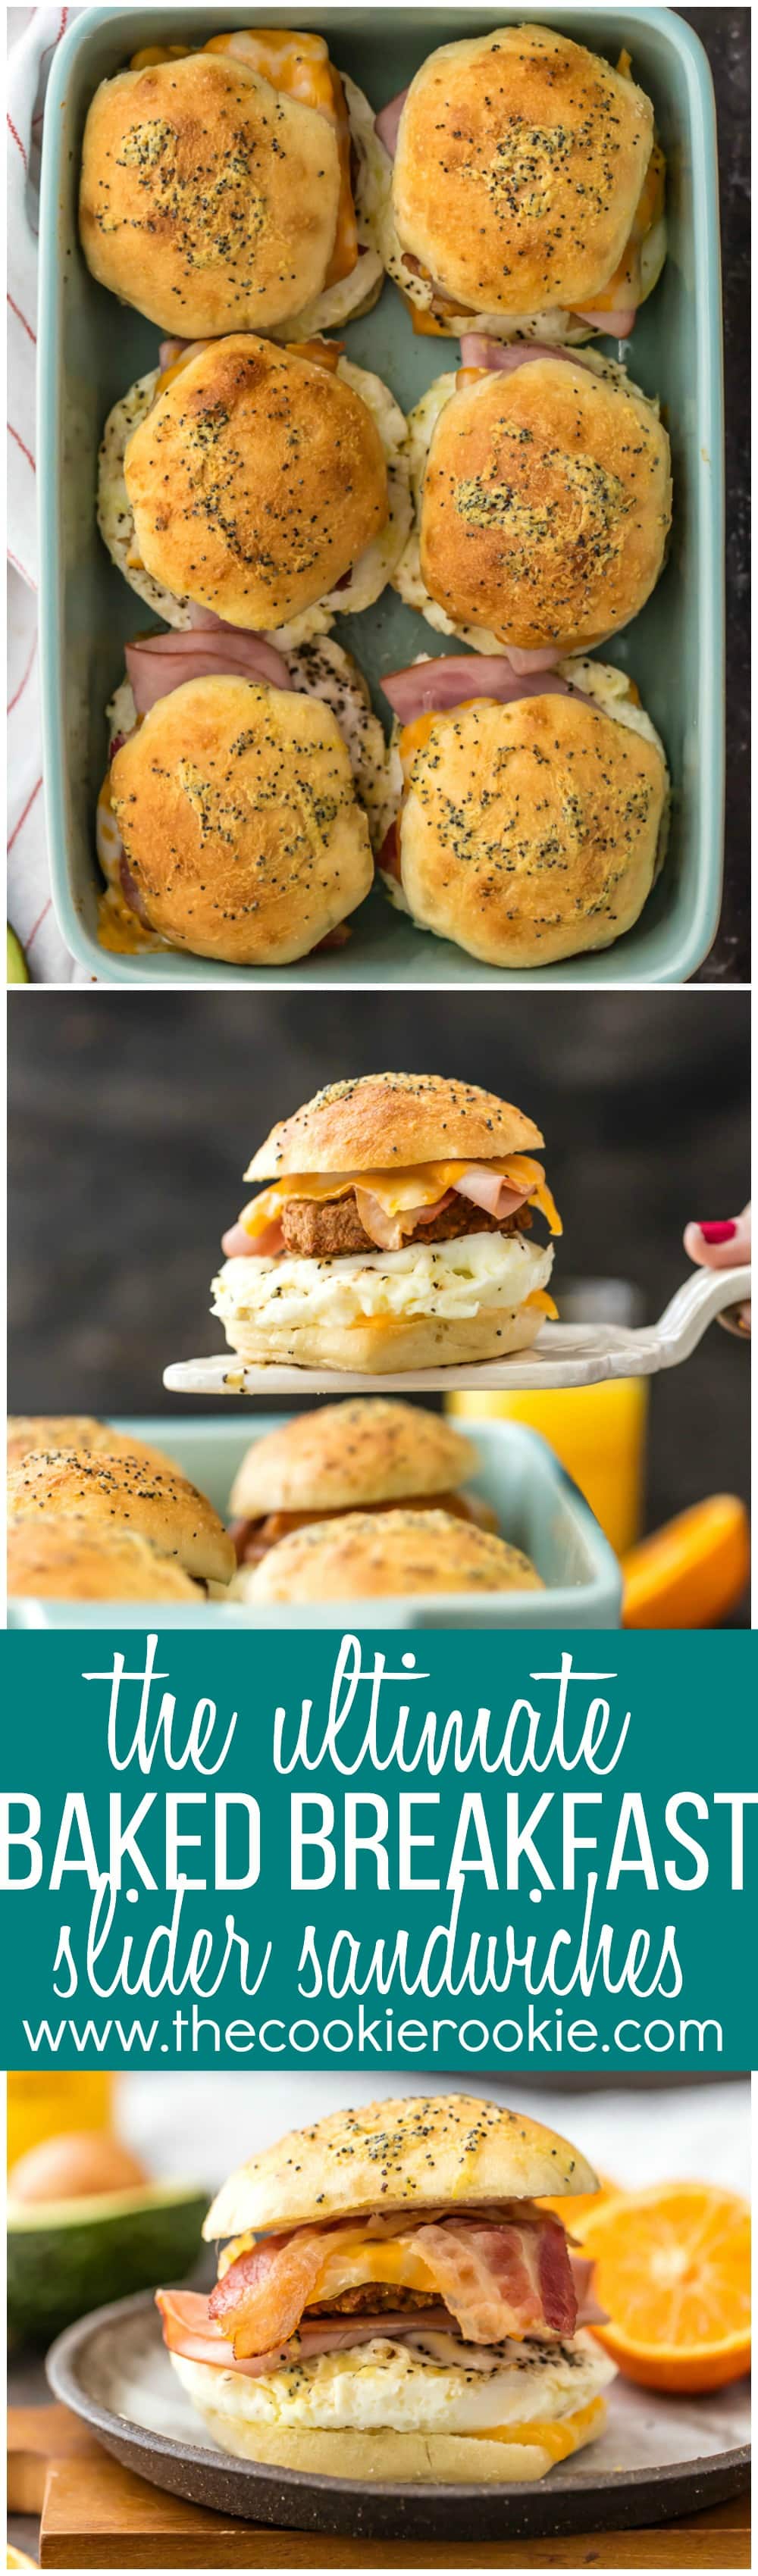 The Ultimate Baked Breakfast Sandwich Sliders - The Cookie Rookie